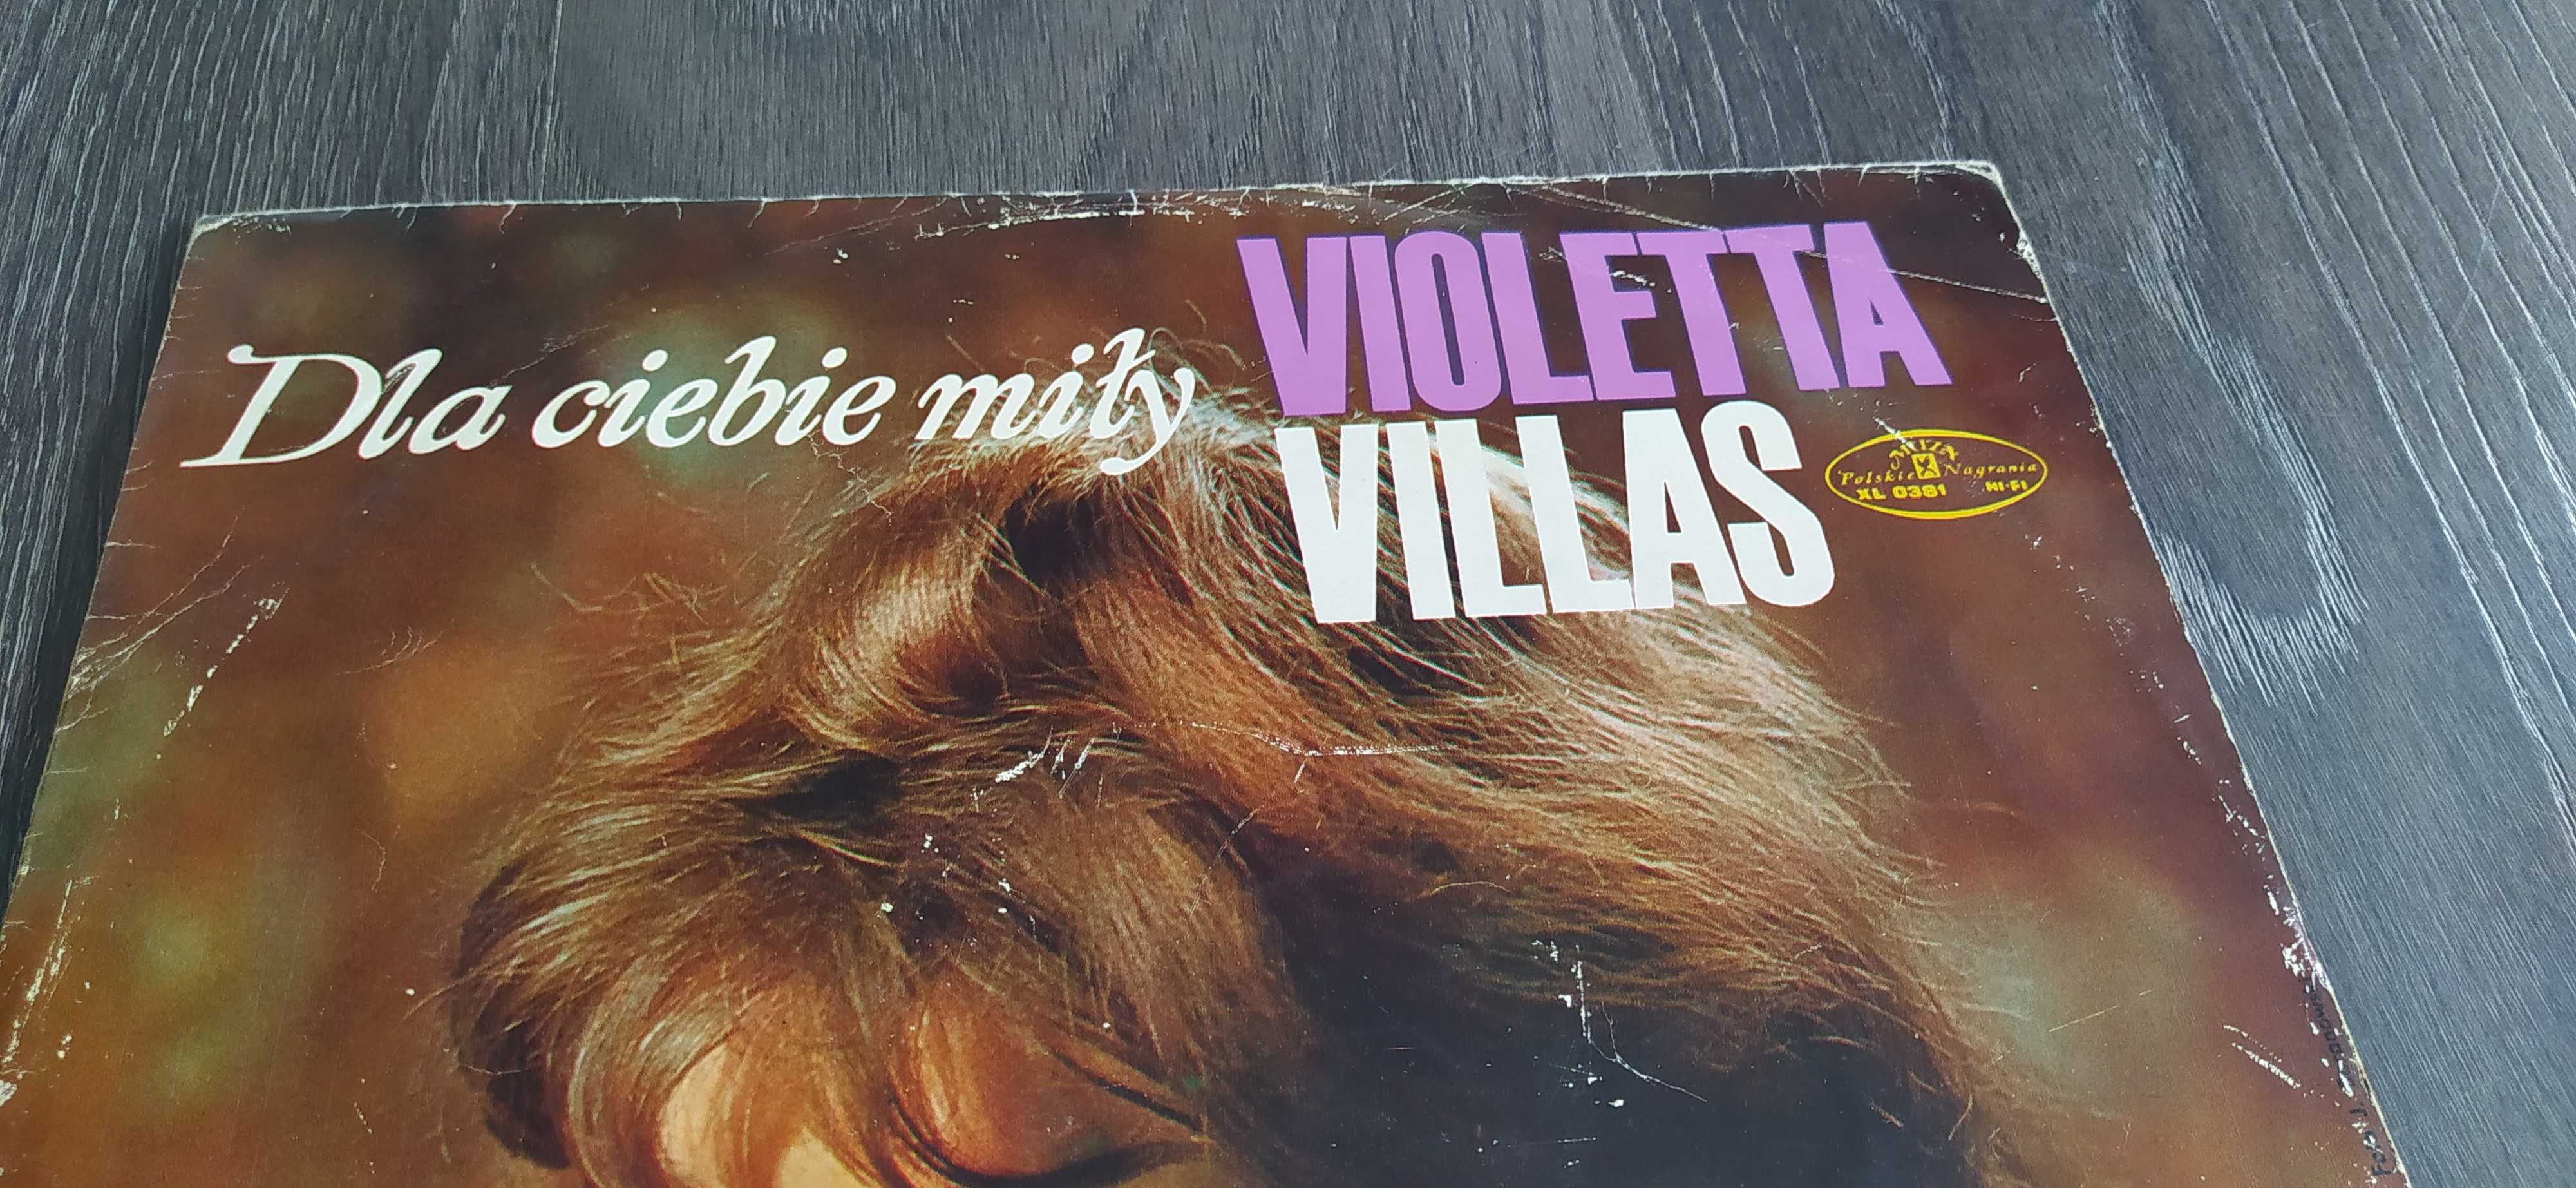 Płyta winylowa Violetta Villas